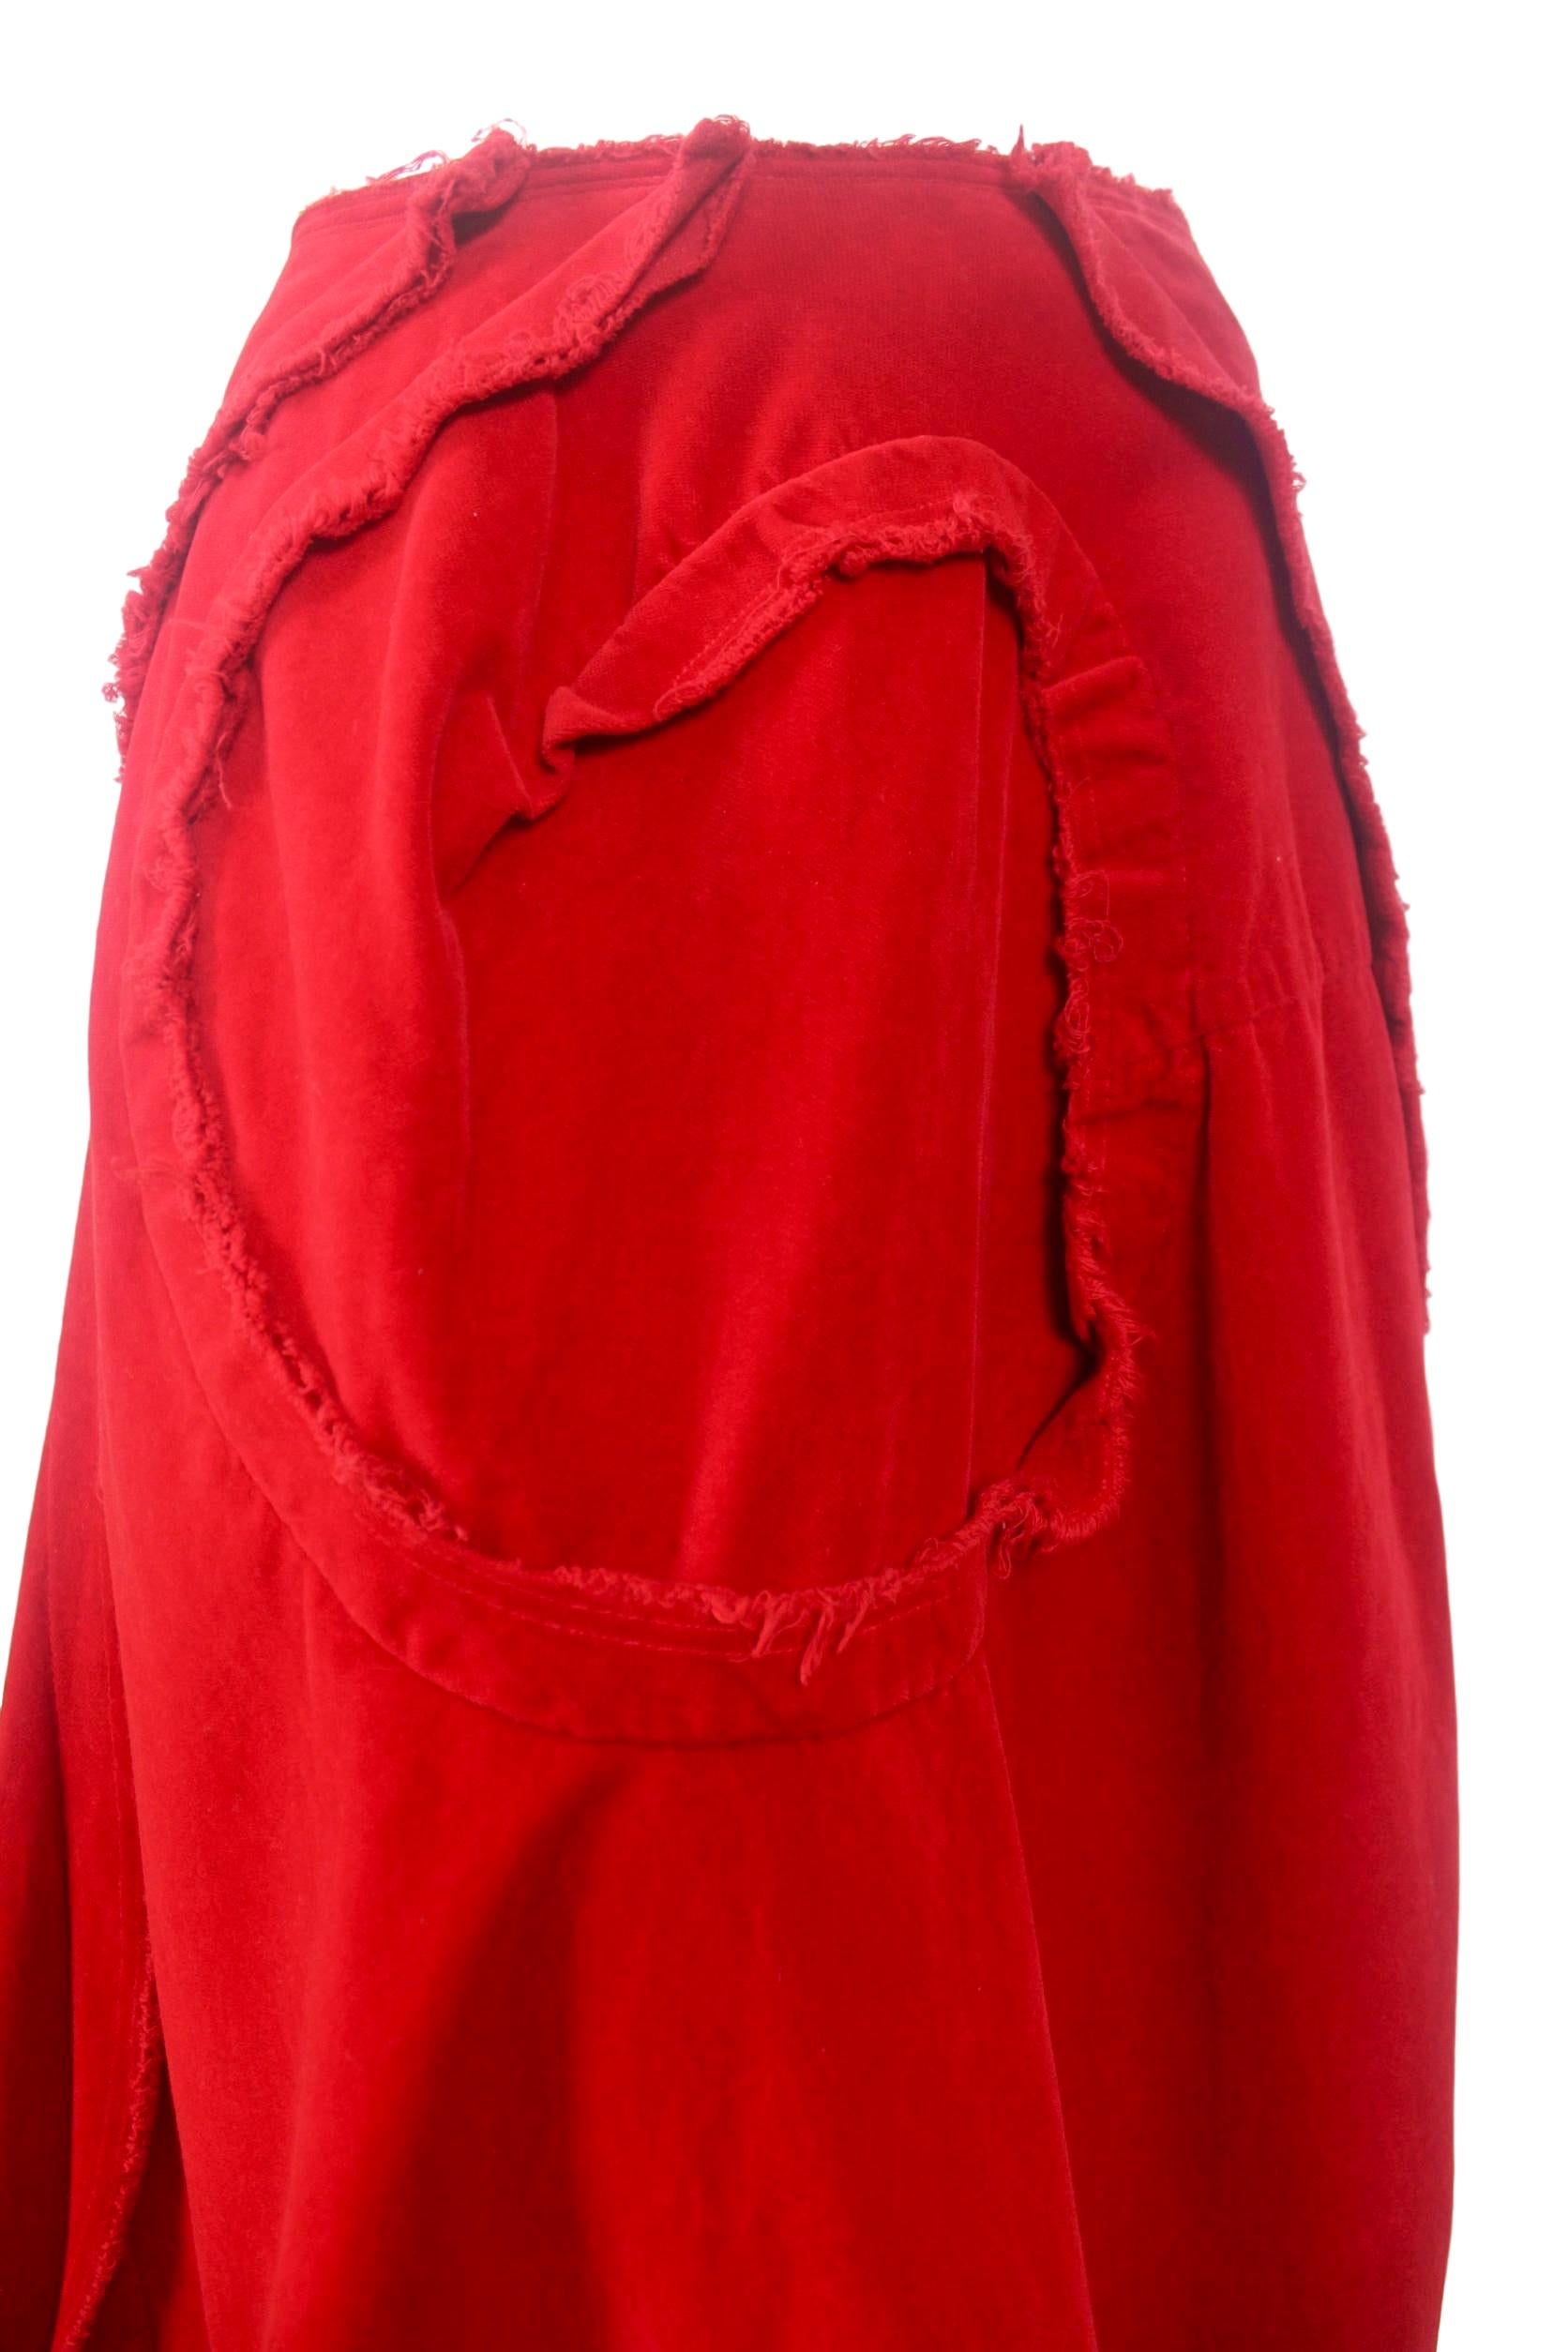 Comme des Garcons
2003 Red Velvet Skirt
Labelled size S